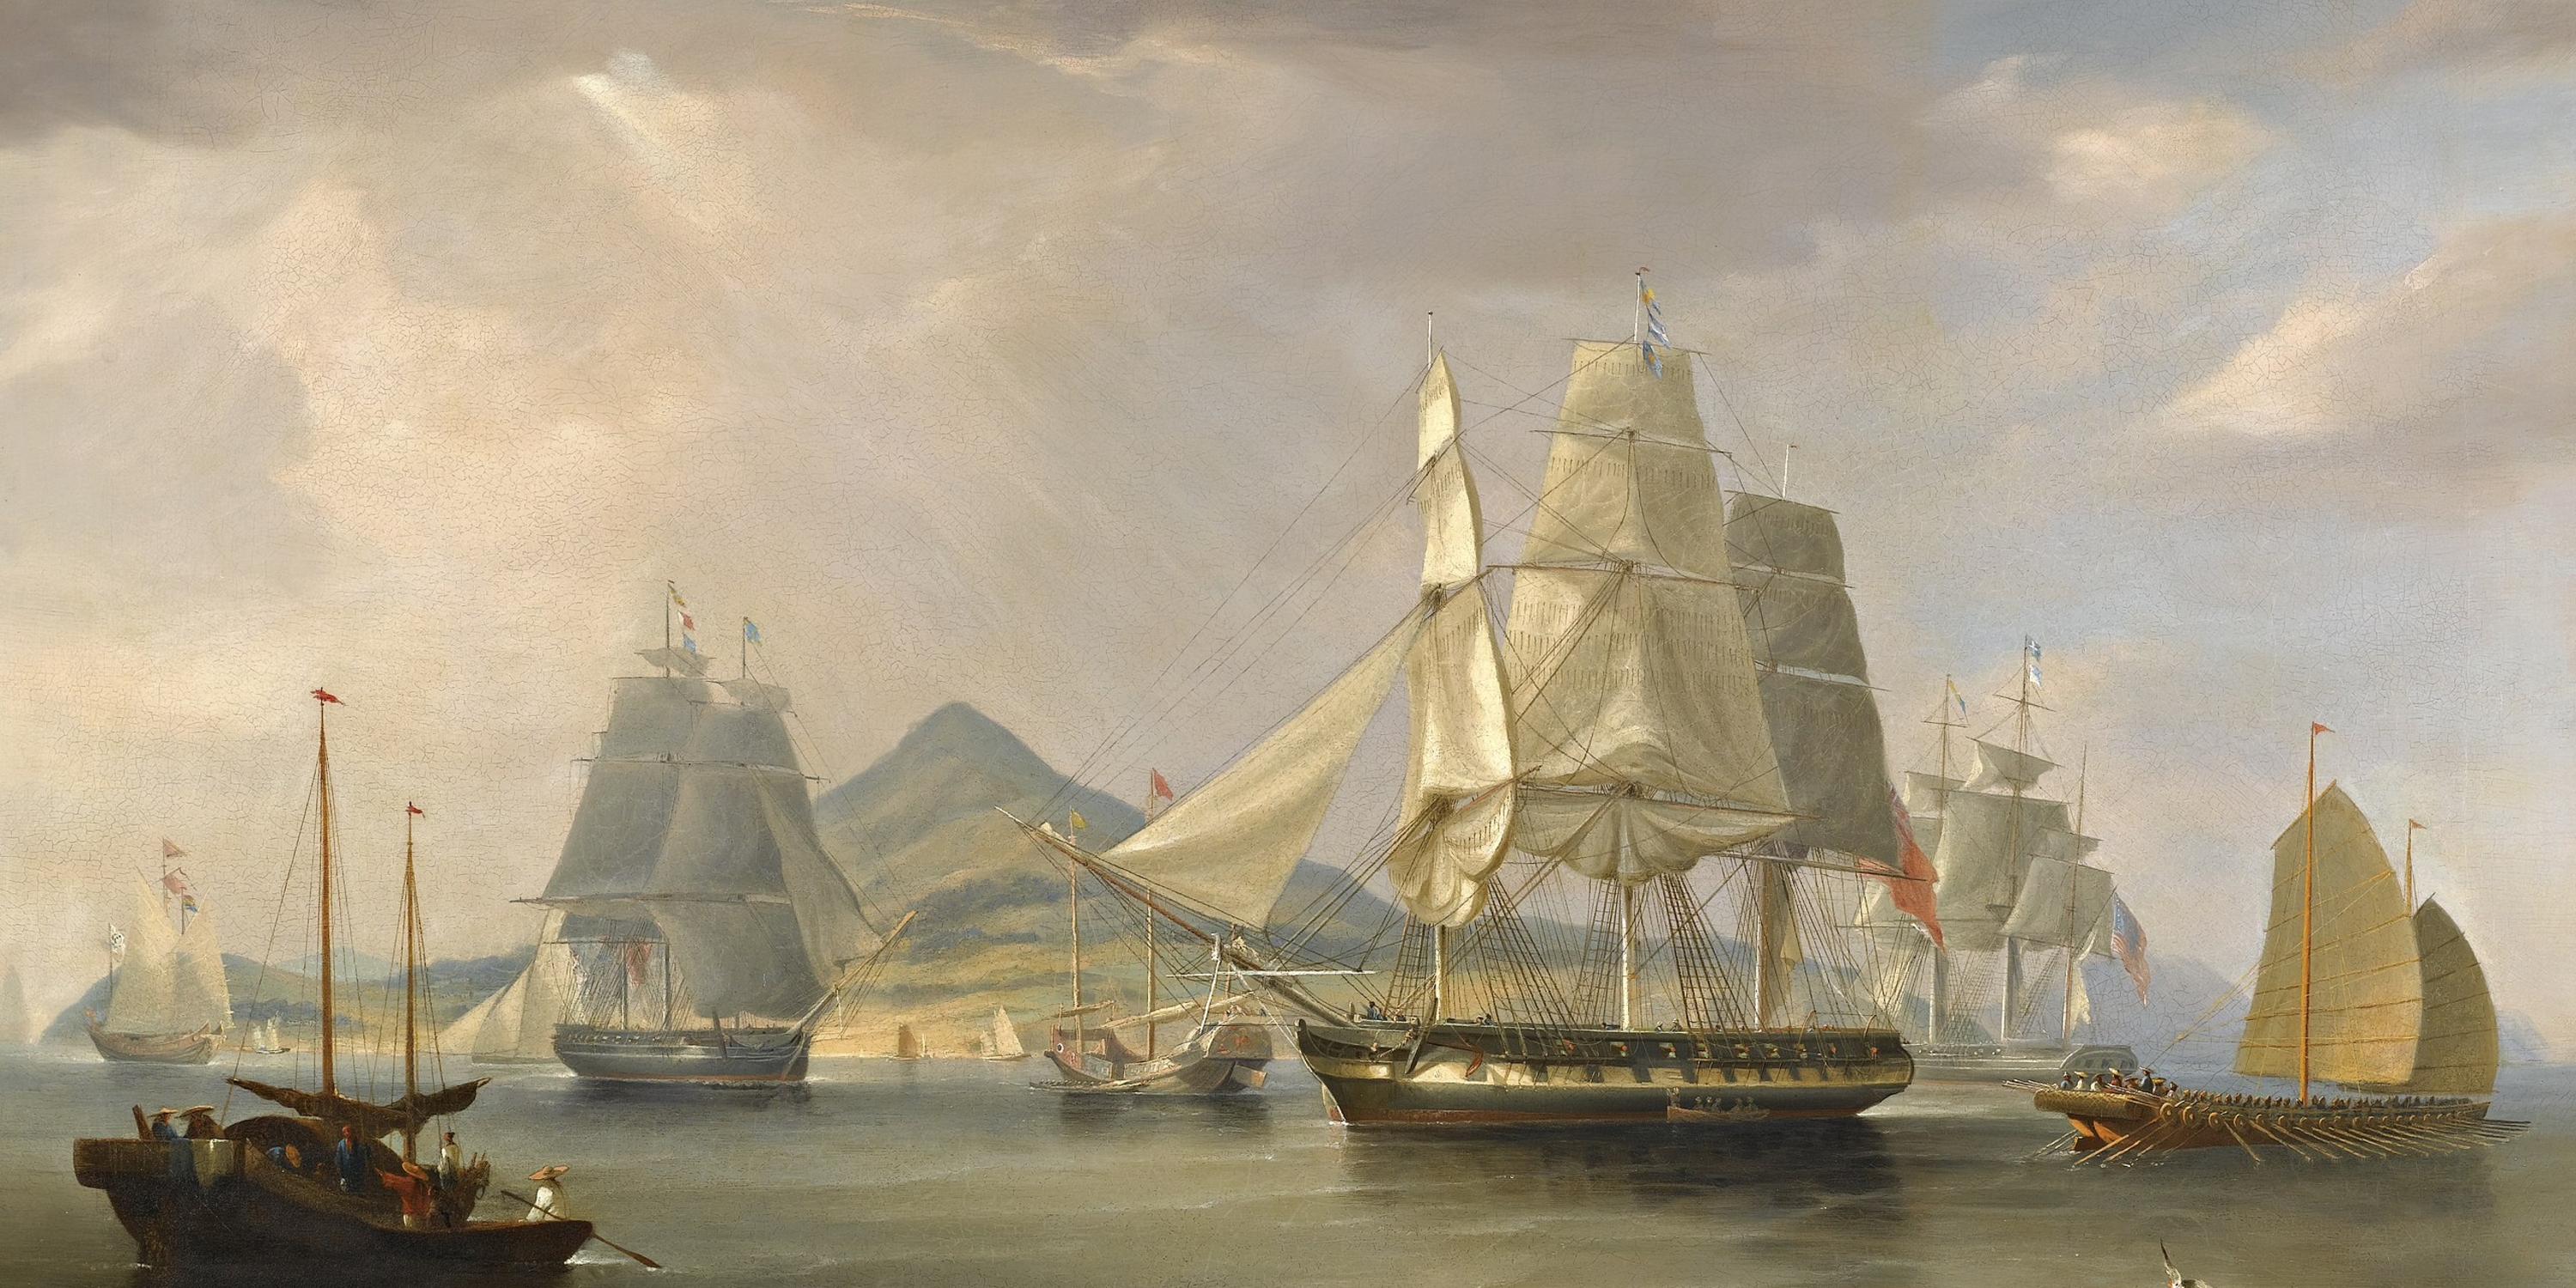 The opium ships at Lintin, China, 1824 - painting by William John Huggins